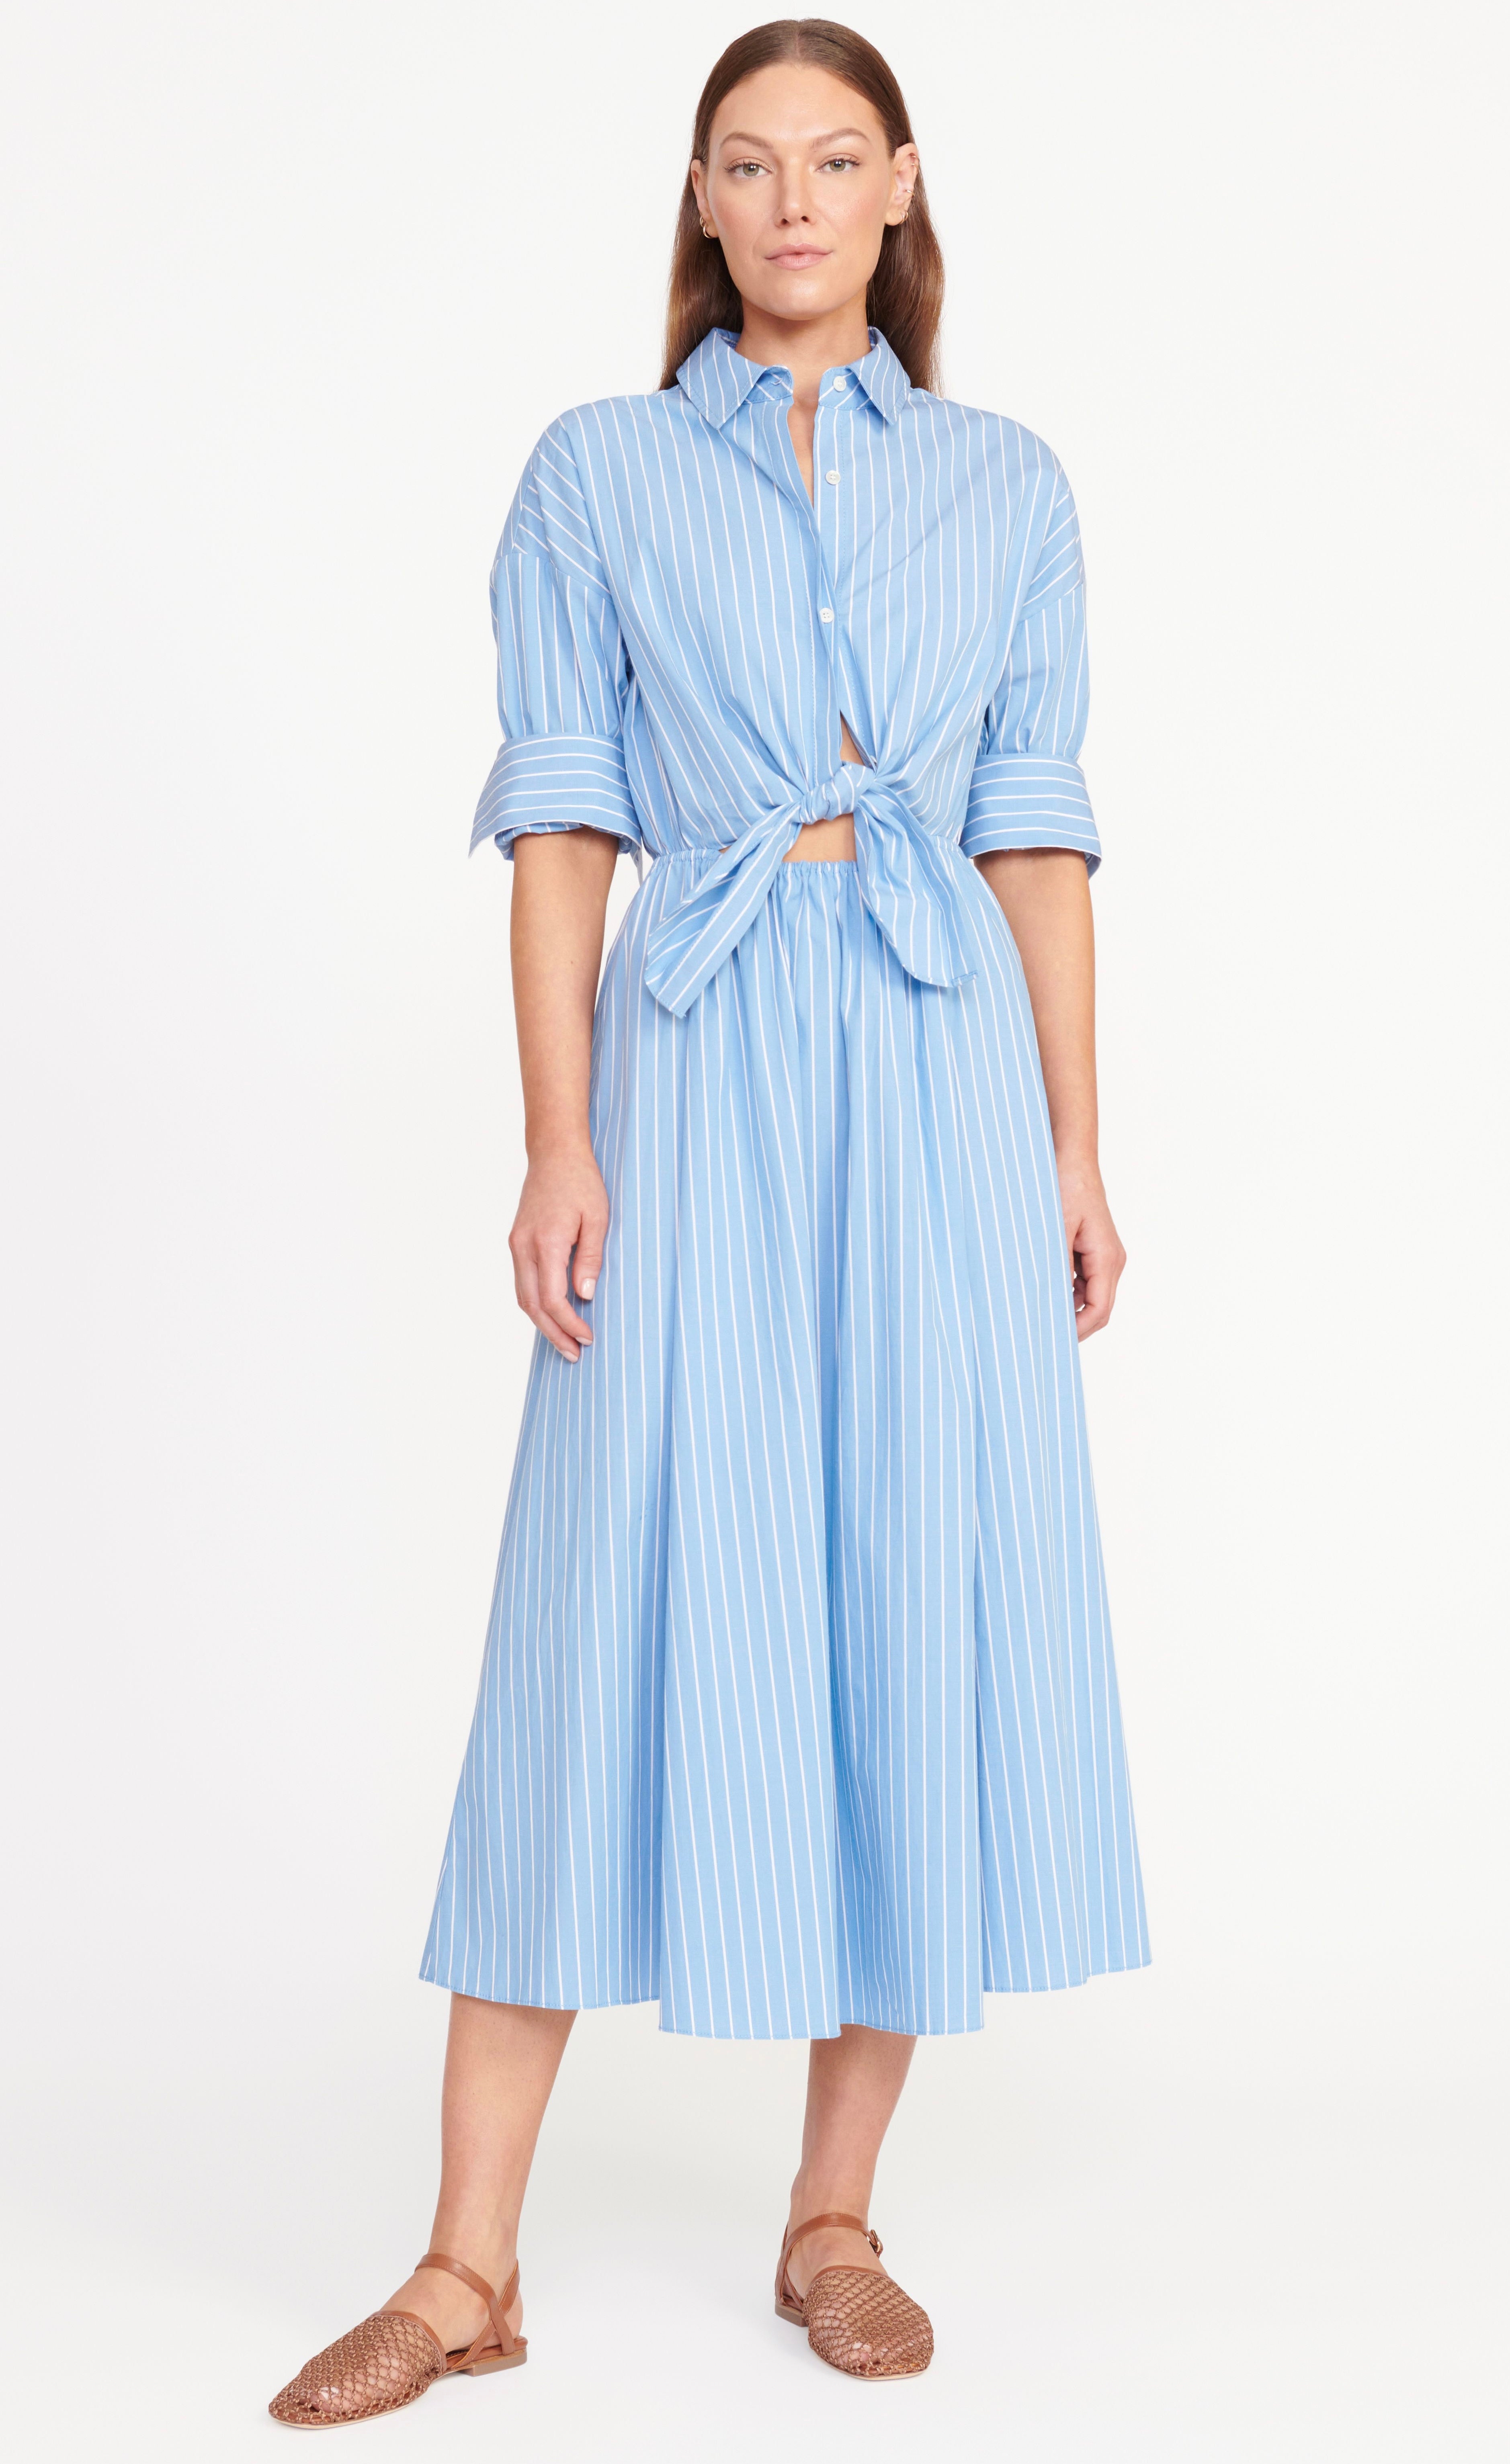 Staud Lisa Dress in Azure Pinstripe